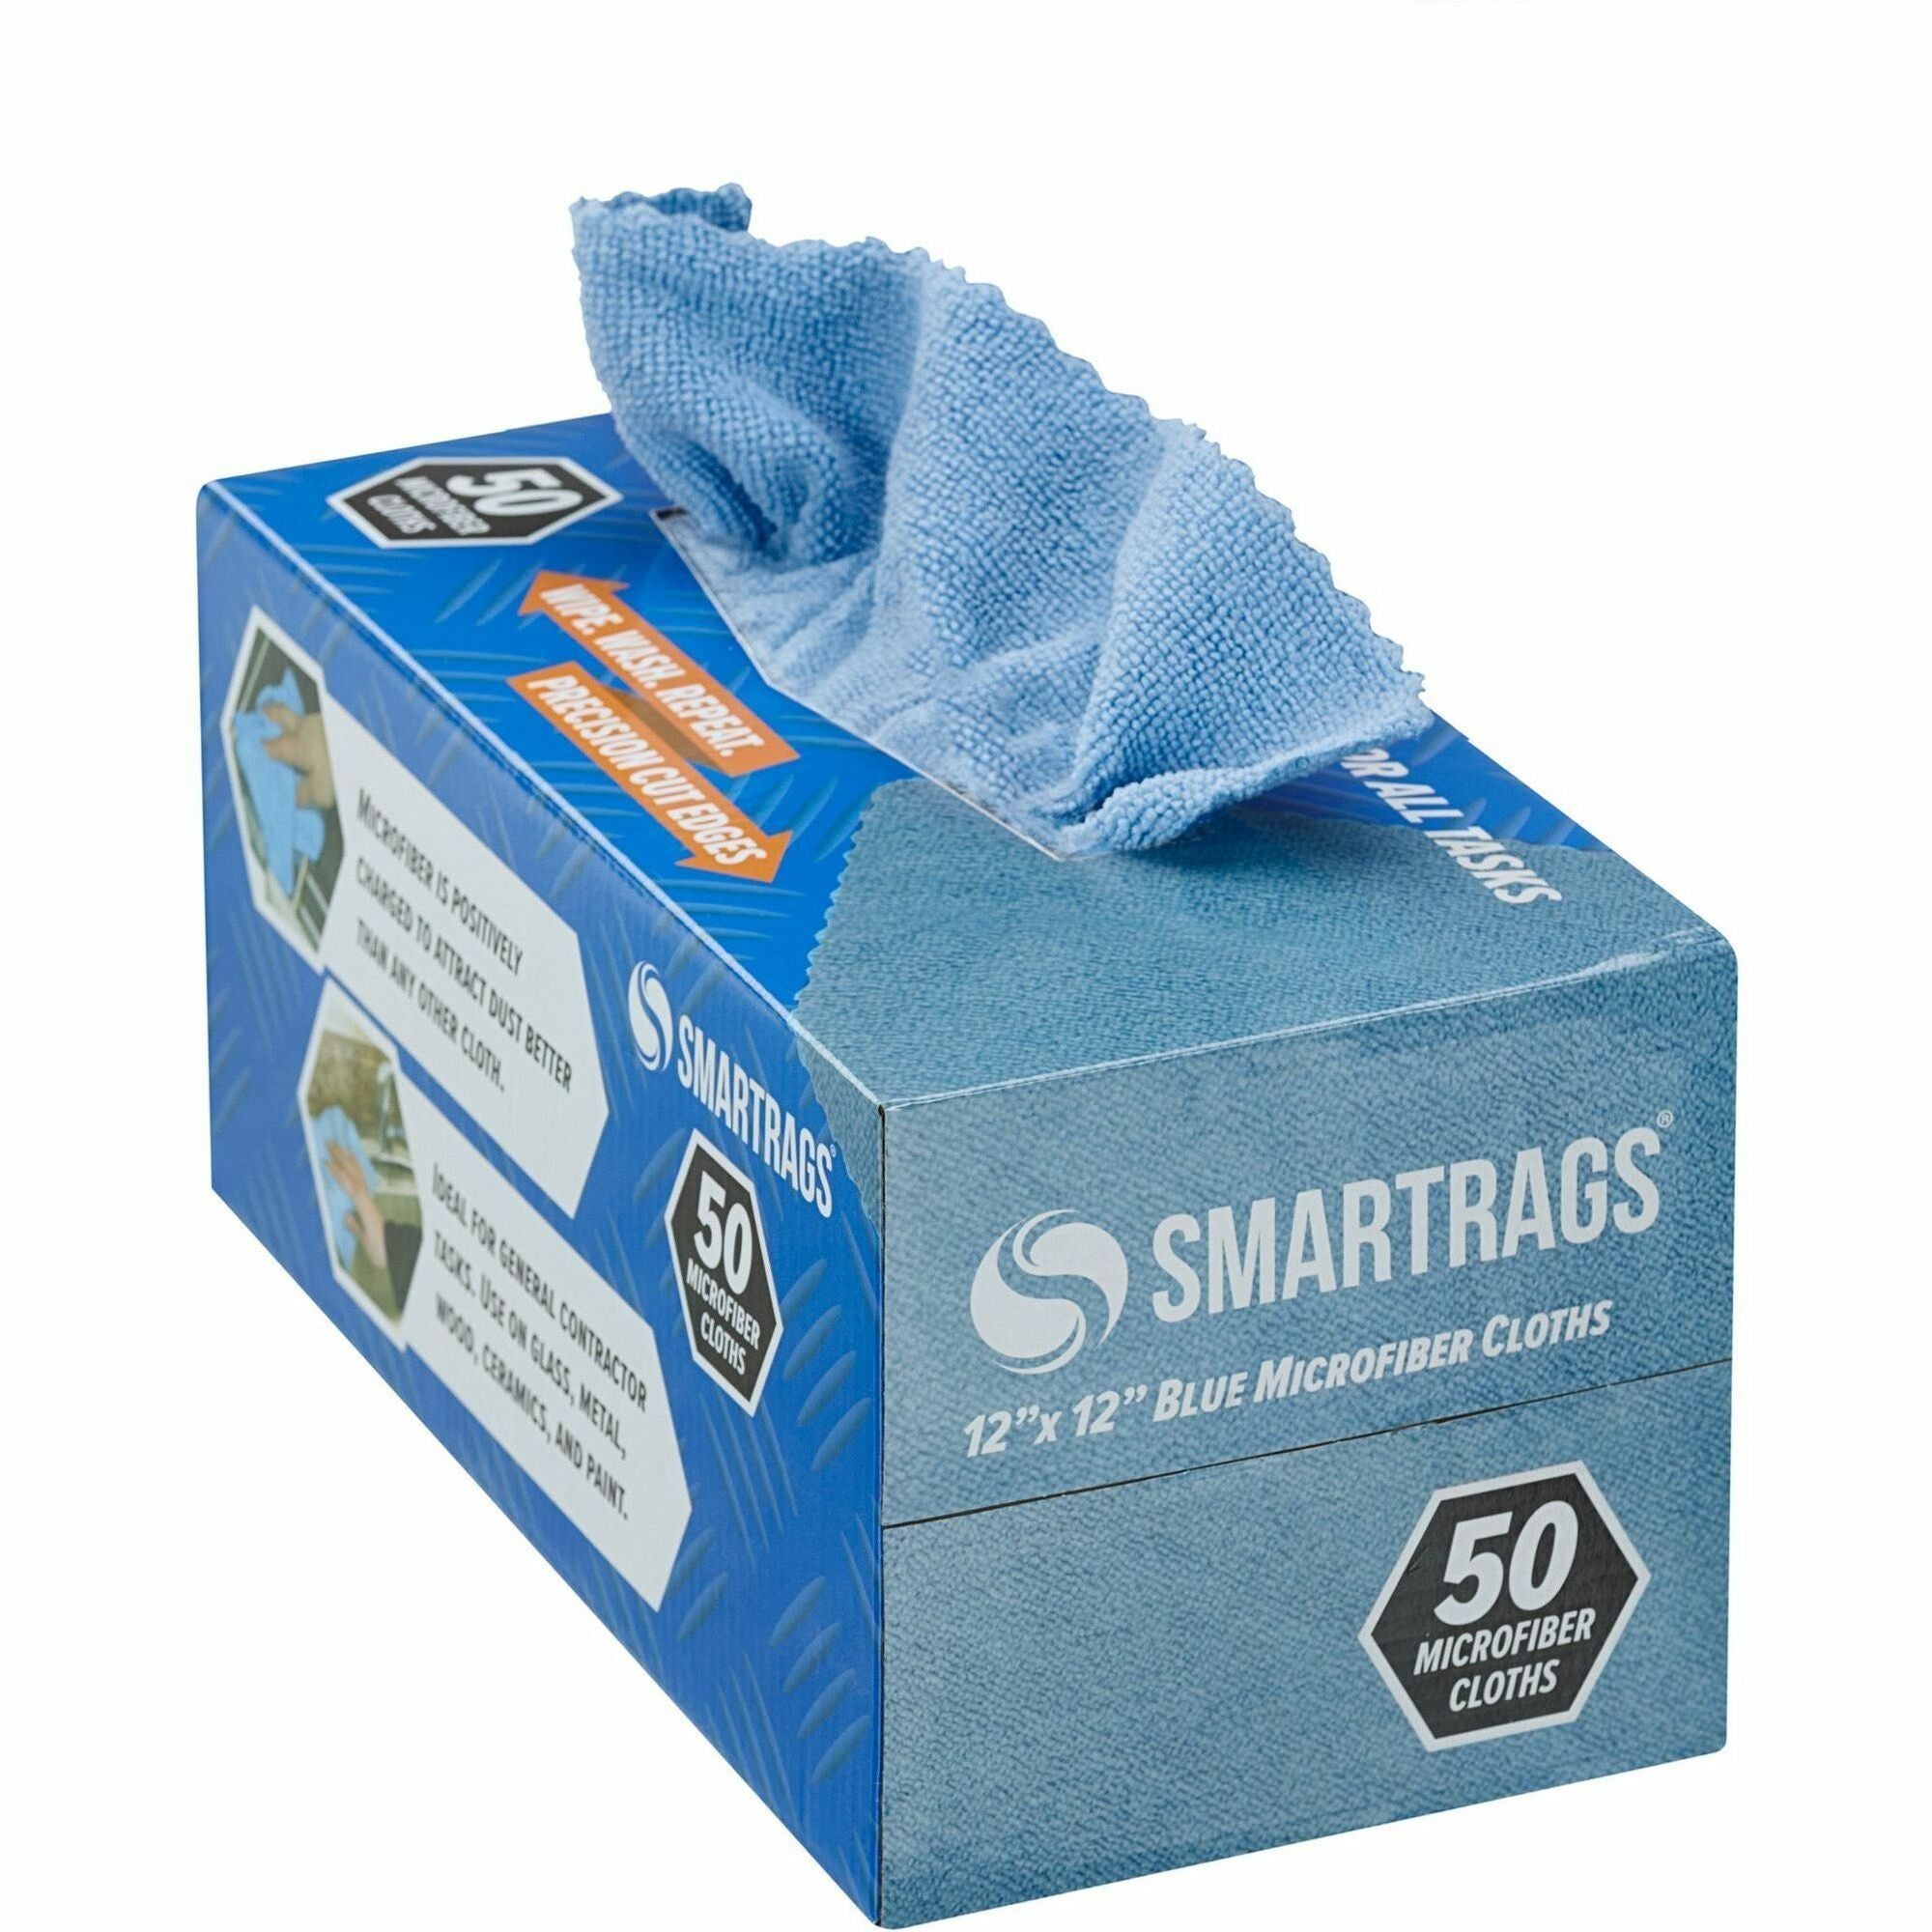 monarch-smart-rags-microfiber-cloths-for-automotive-office-healthcare-household-garage-breakroom-hospital-industry-50-box-reusable-streak-free-lint-free-dirt-resistant-grime-resistant-blue_monm950b - 1